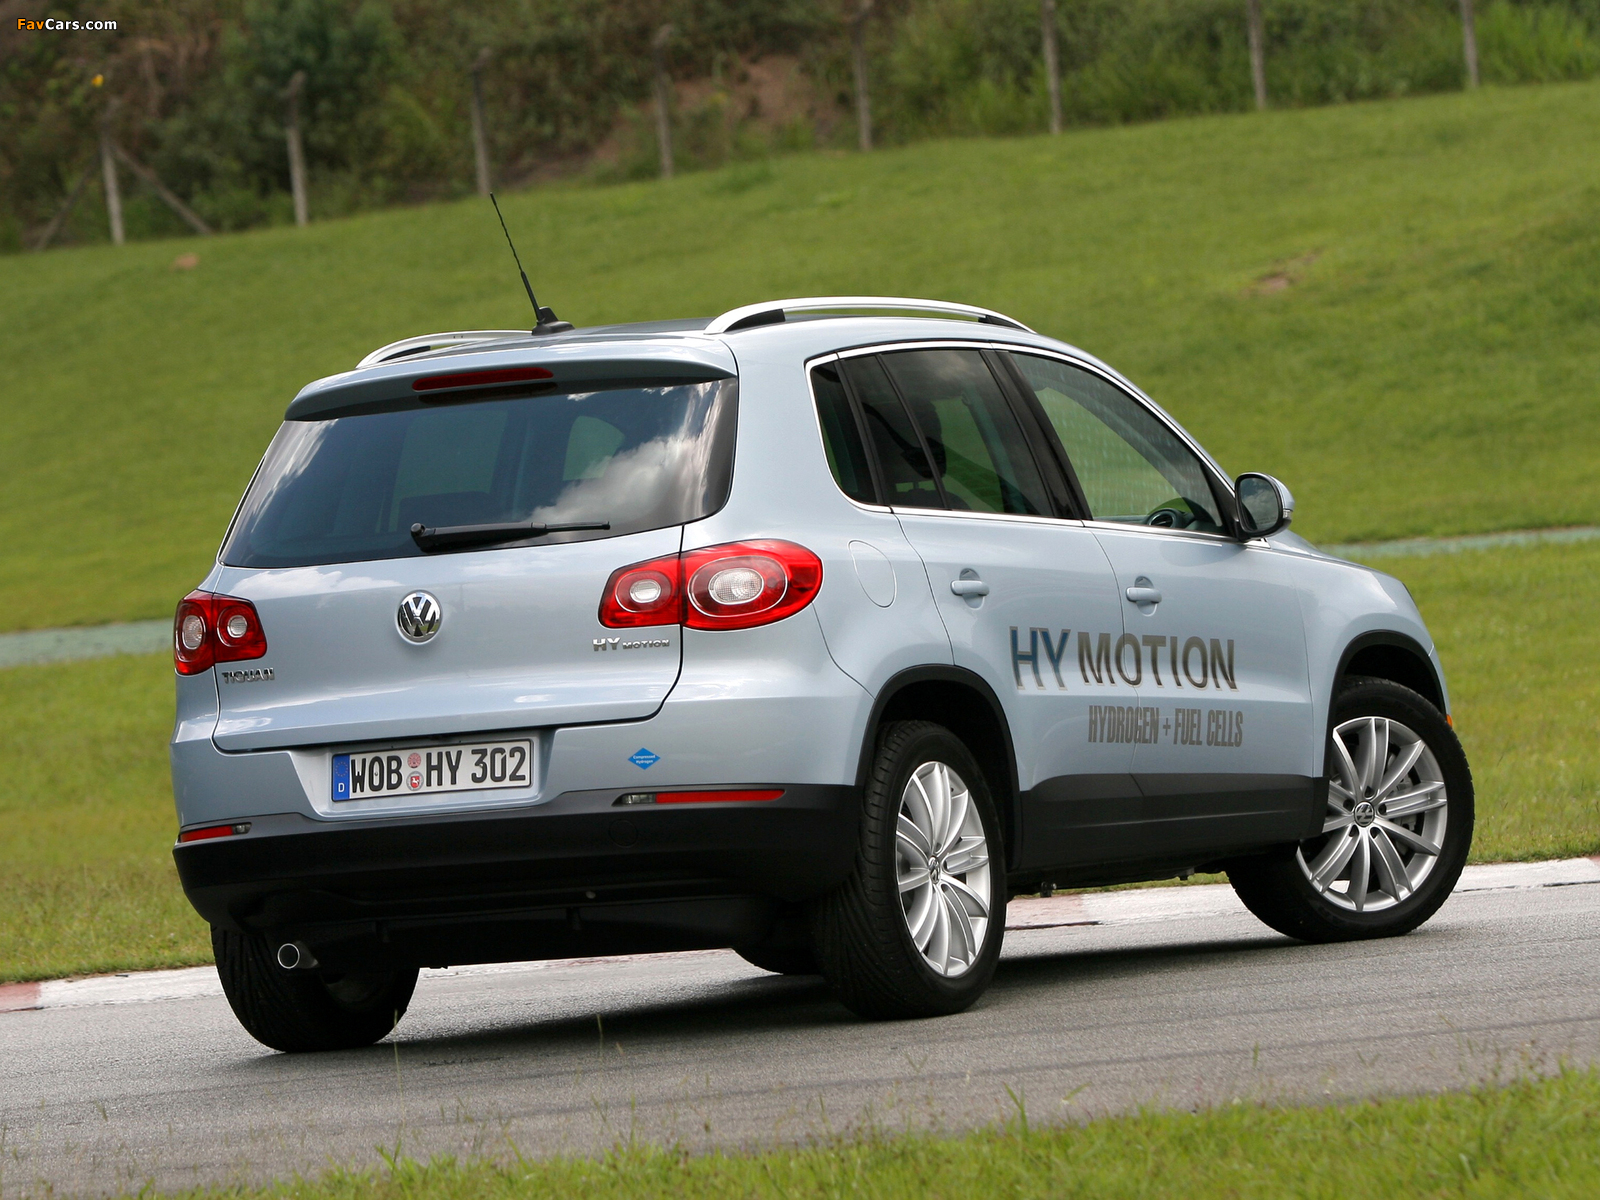 Volkswagen Tiguan HY Motion Concept 2007 pictures (1600 x 1200)